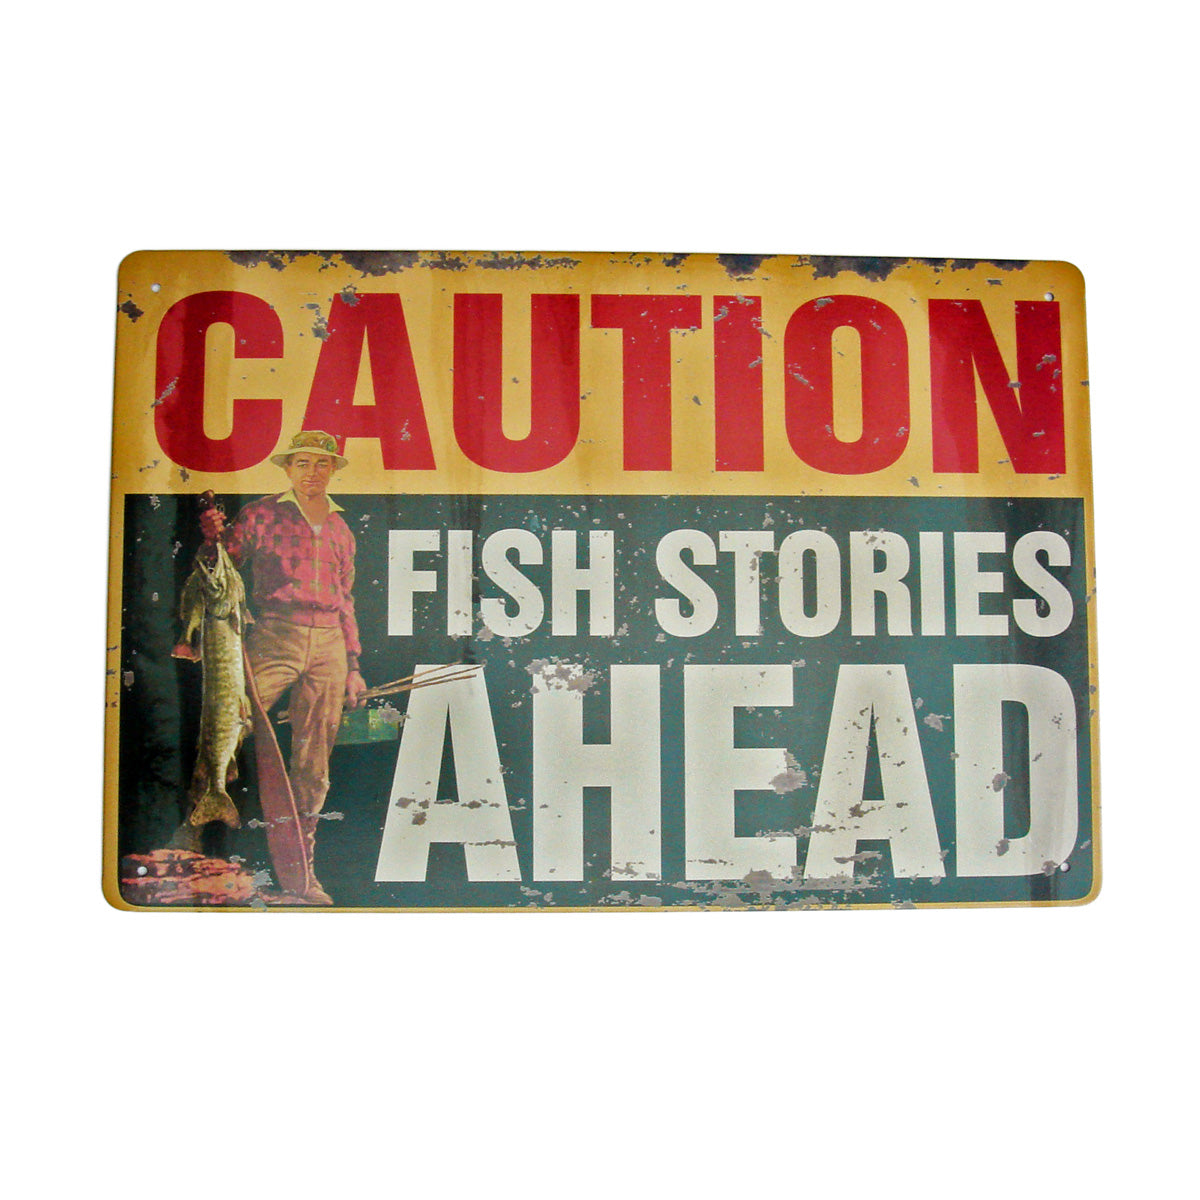 Warning Fish Stories Ahead Funny Metal Fishing Sign Home Wall Decor/Ta